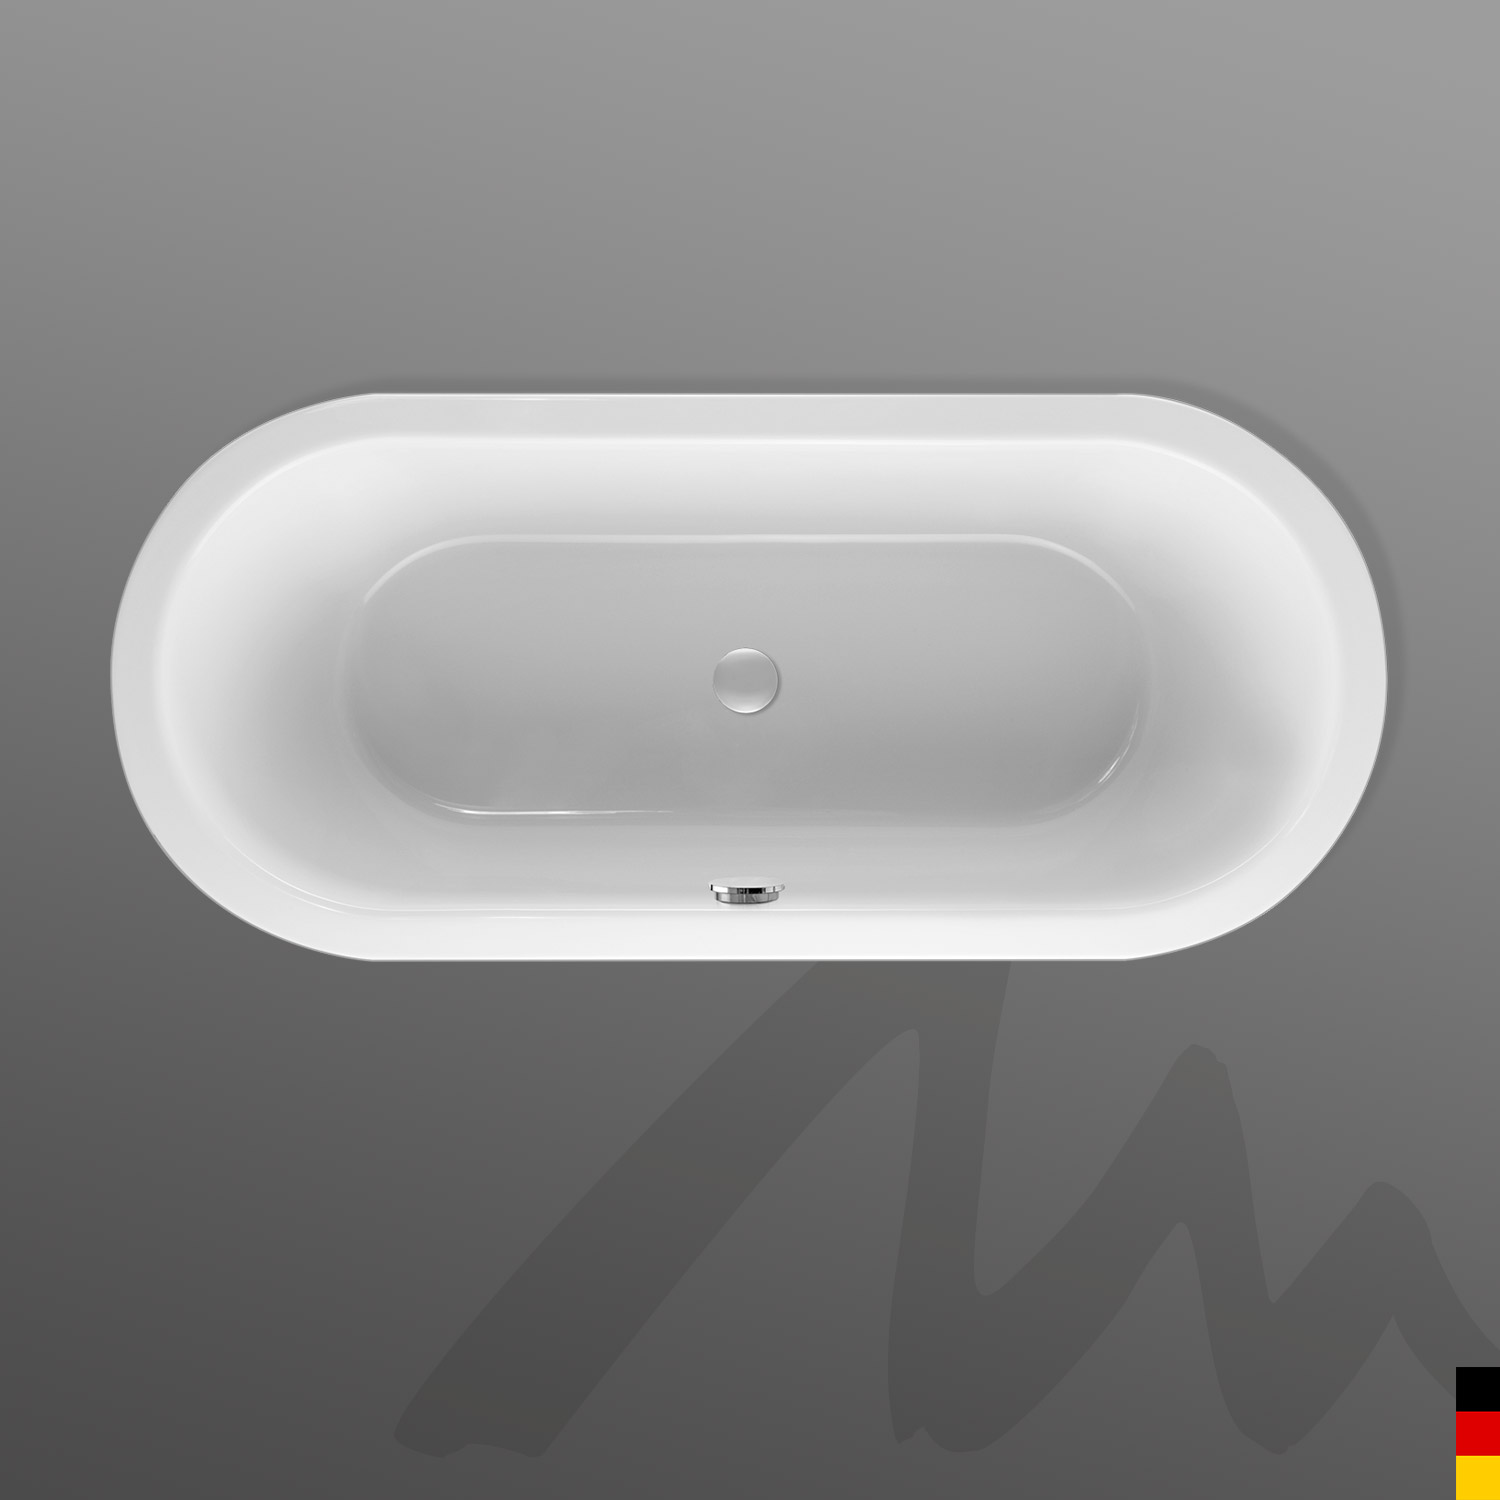 Mauersberger Badewanne Oval Crispa 180/80 duo  180x80x45cm  Farbe:rein-weiß